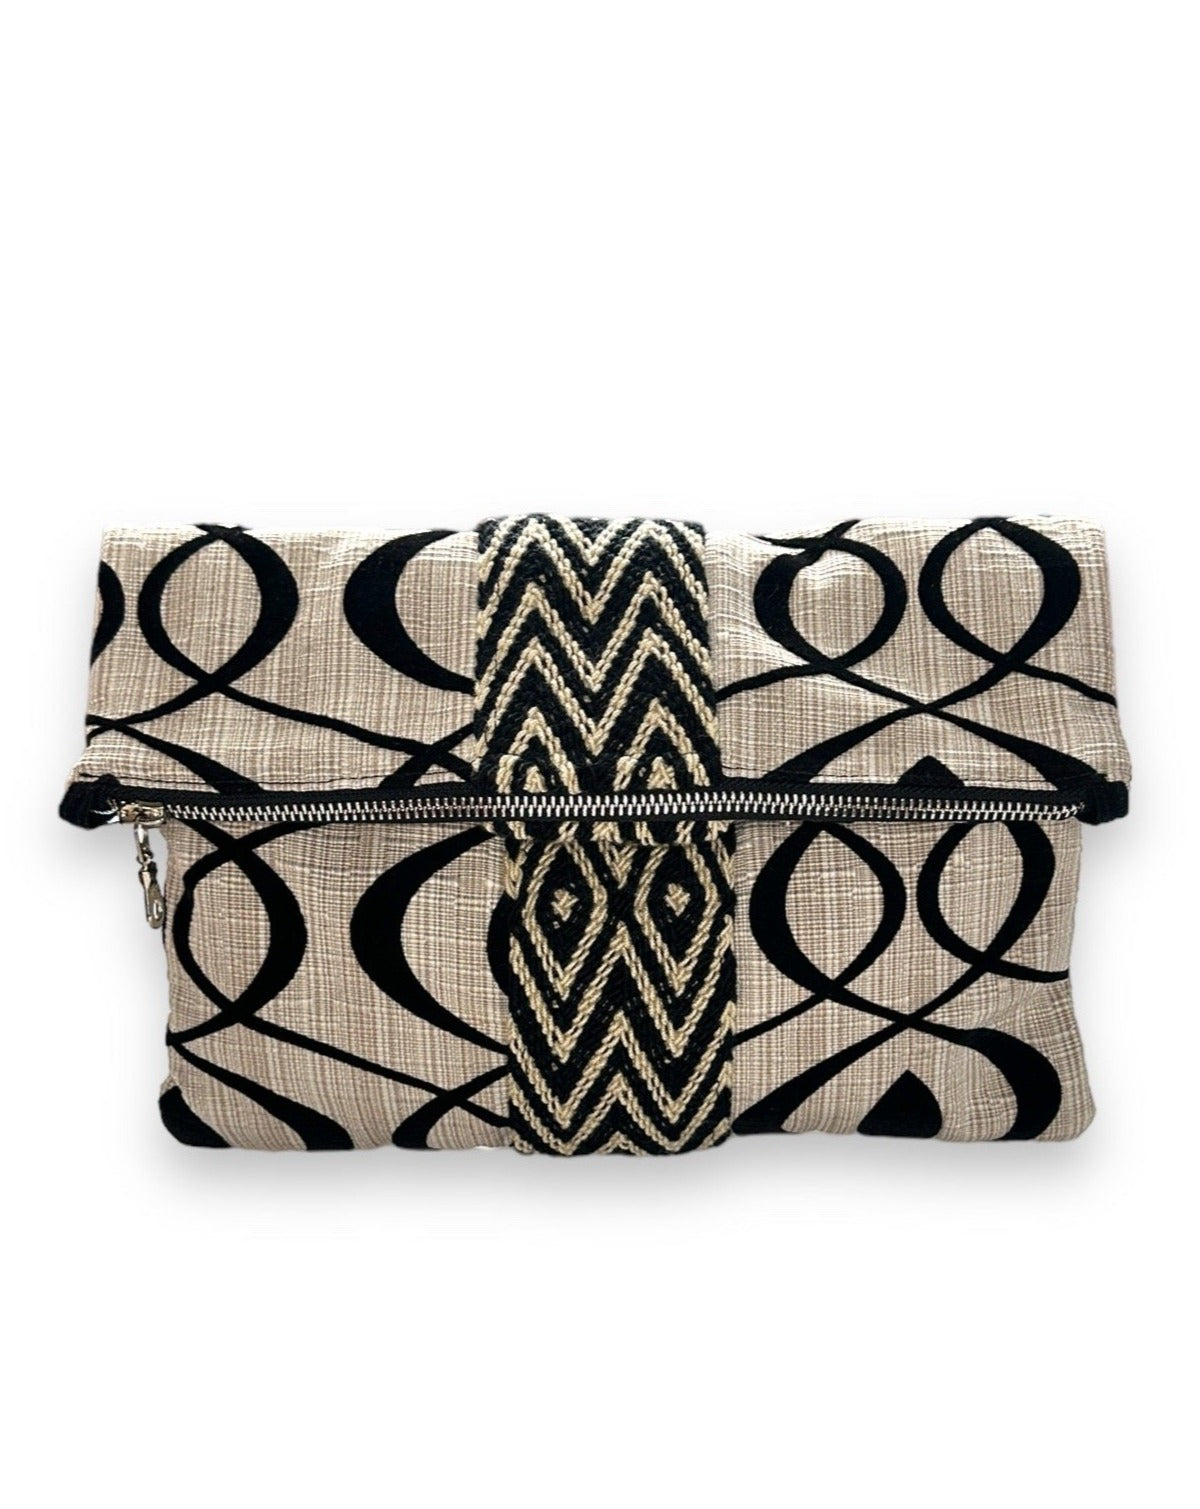 Cream and black swirl foldover Clutch bag with Wayuu trim. 